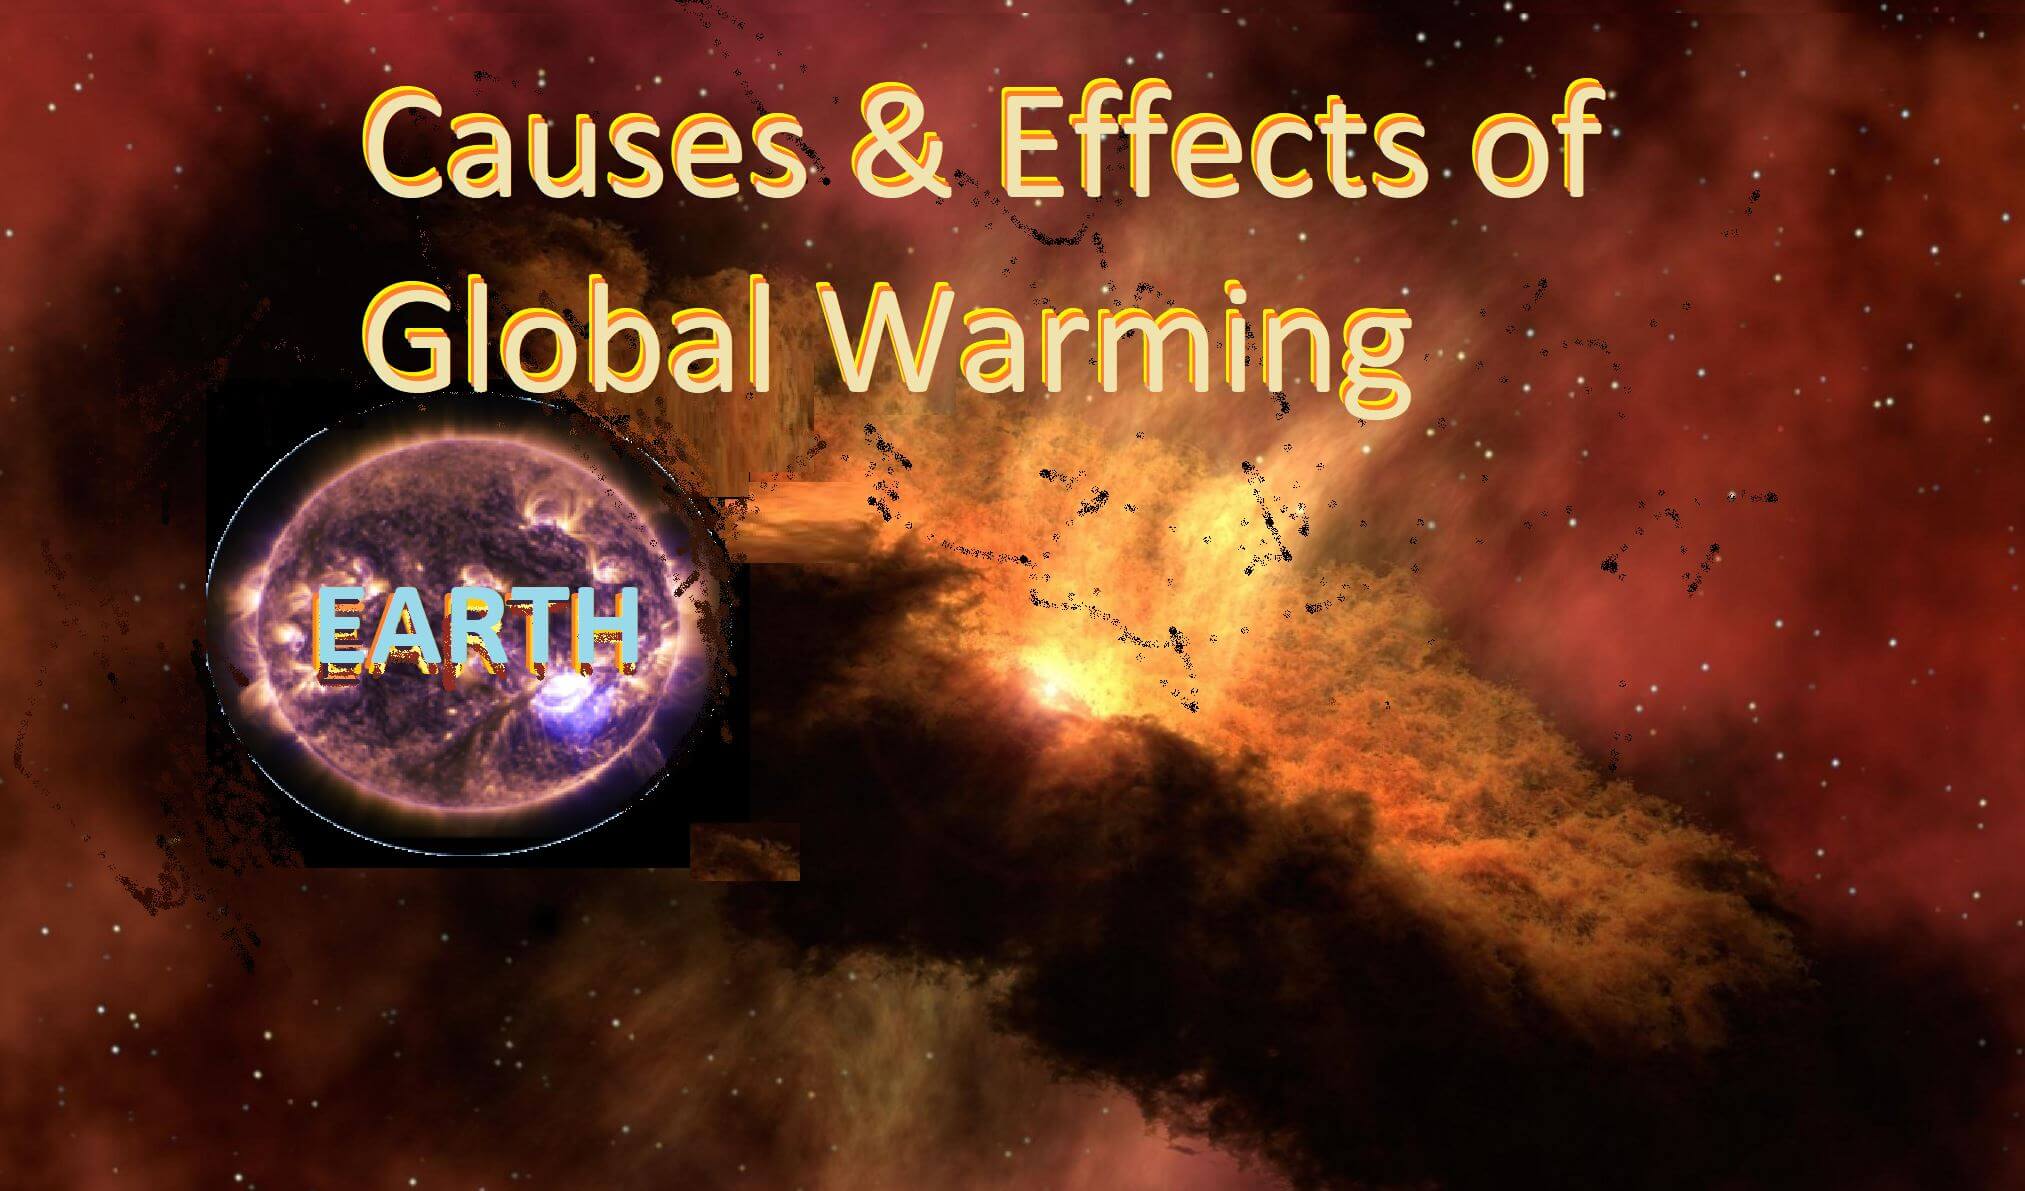 Global Warming Causes